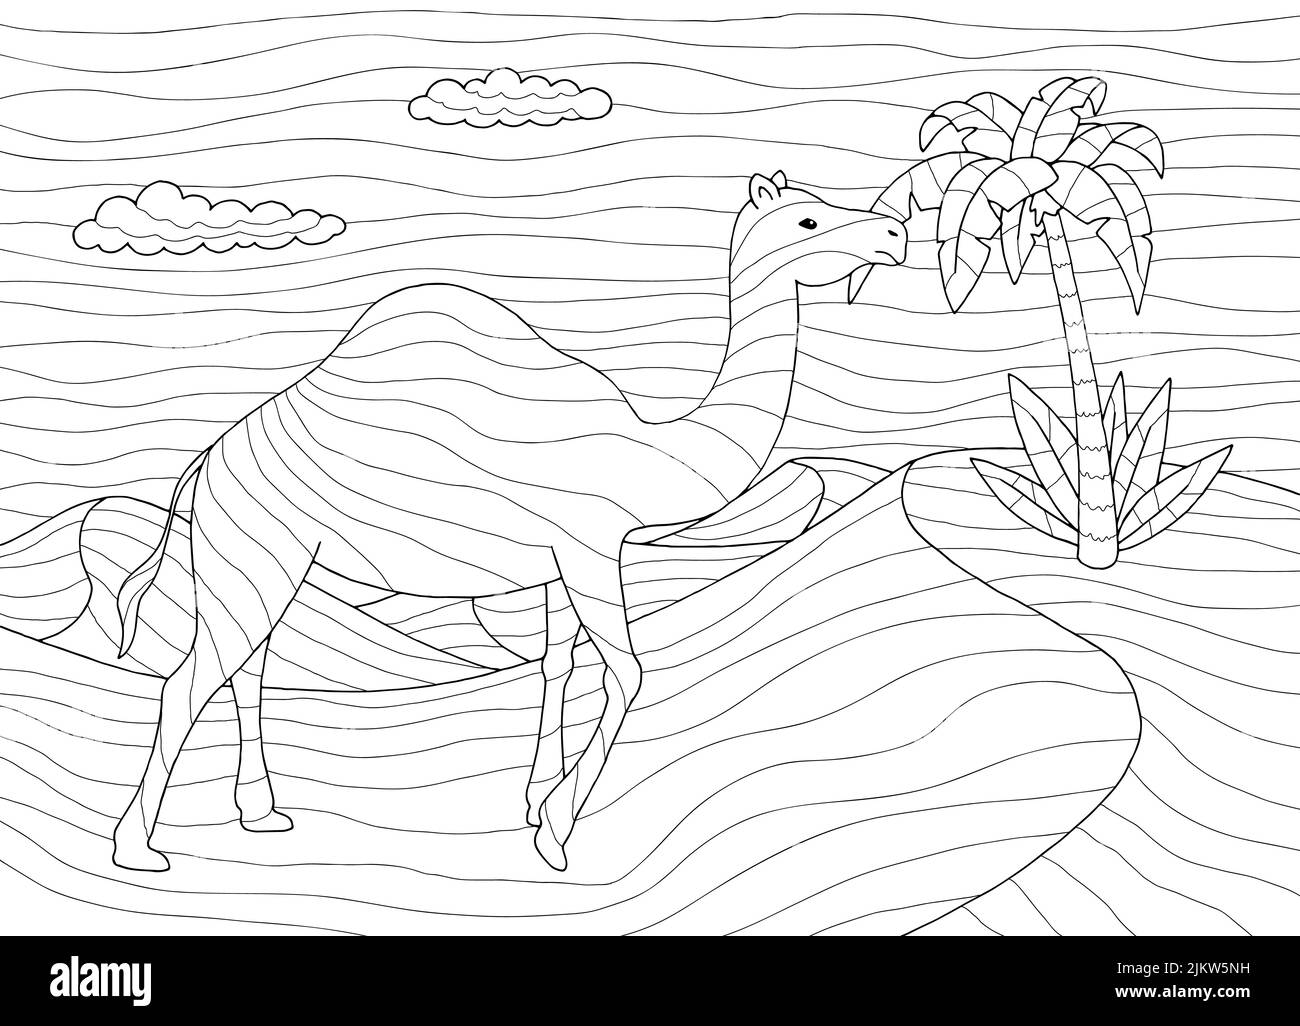 Camel coloring desert graphic black white landscape sketch illustration vector Stock Vector